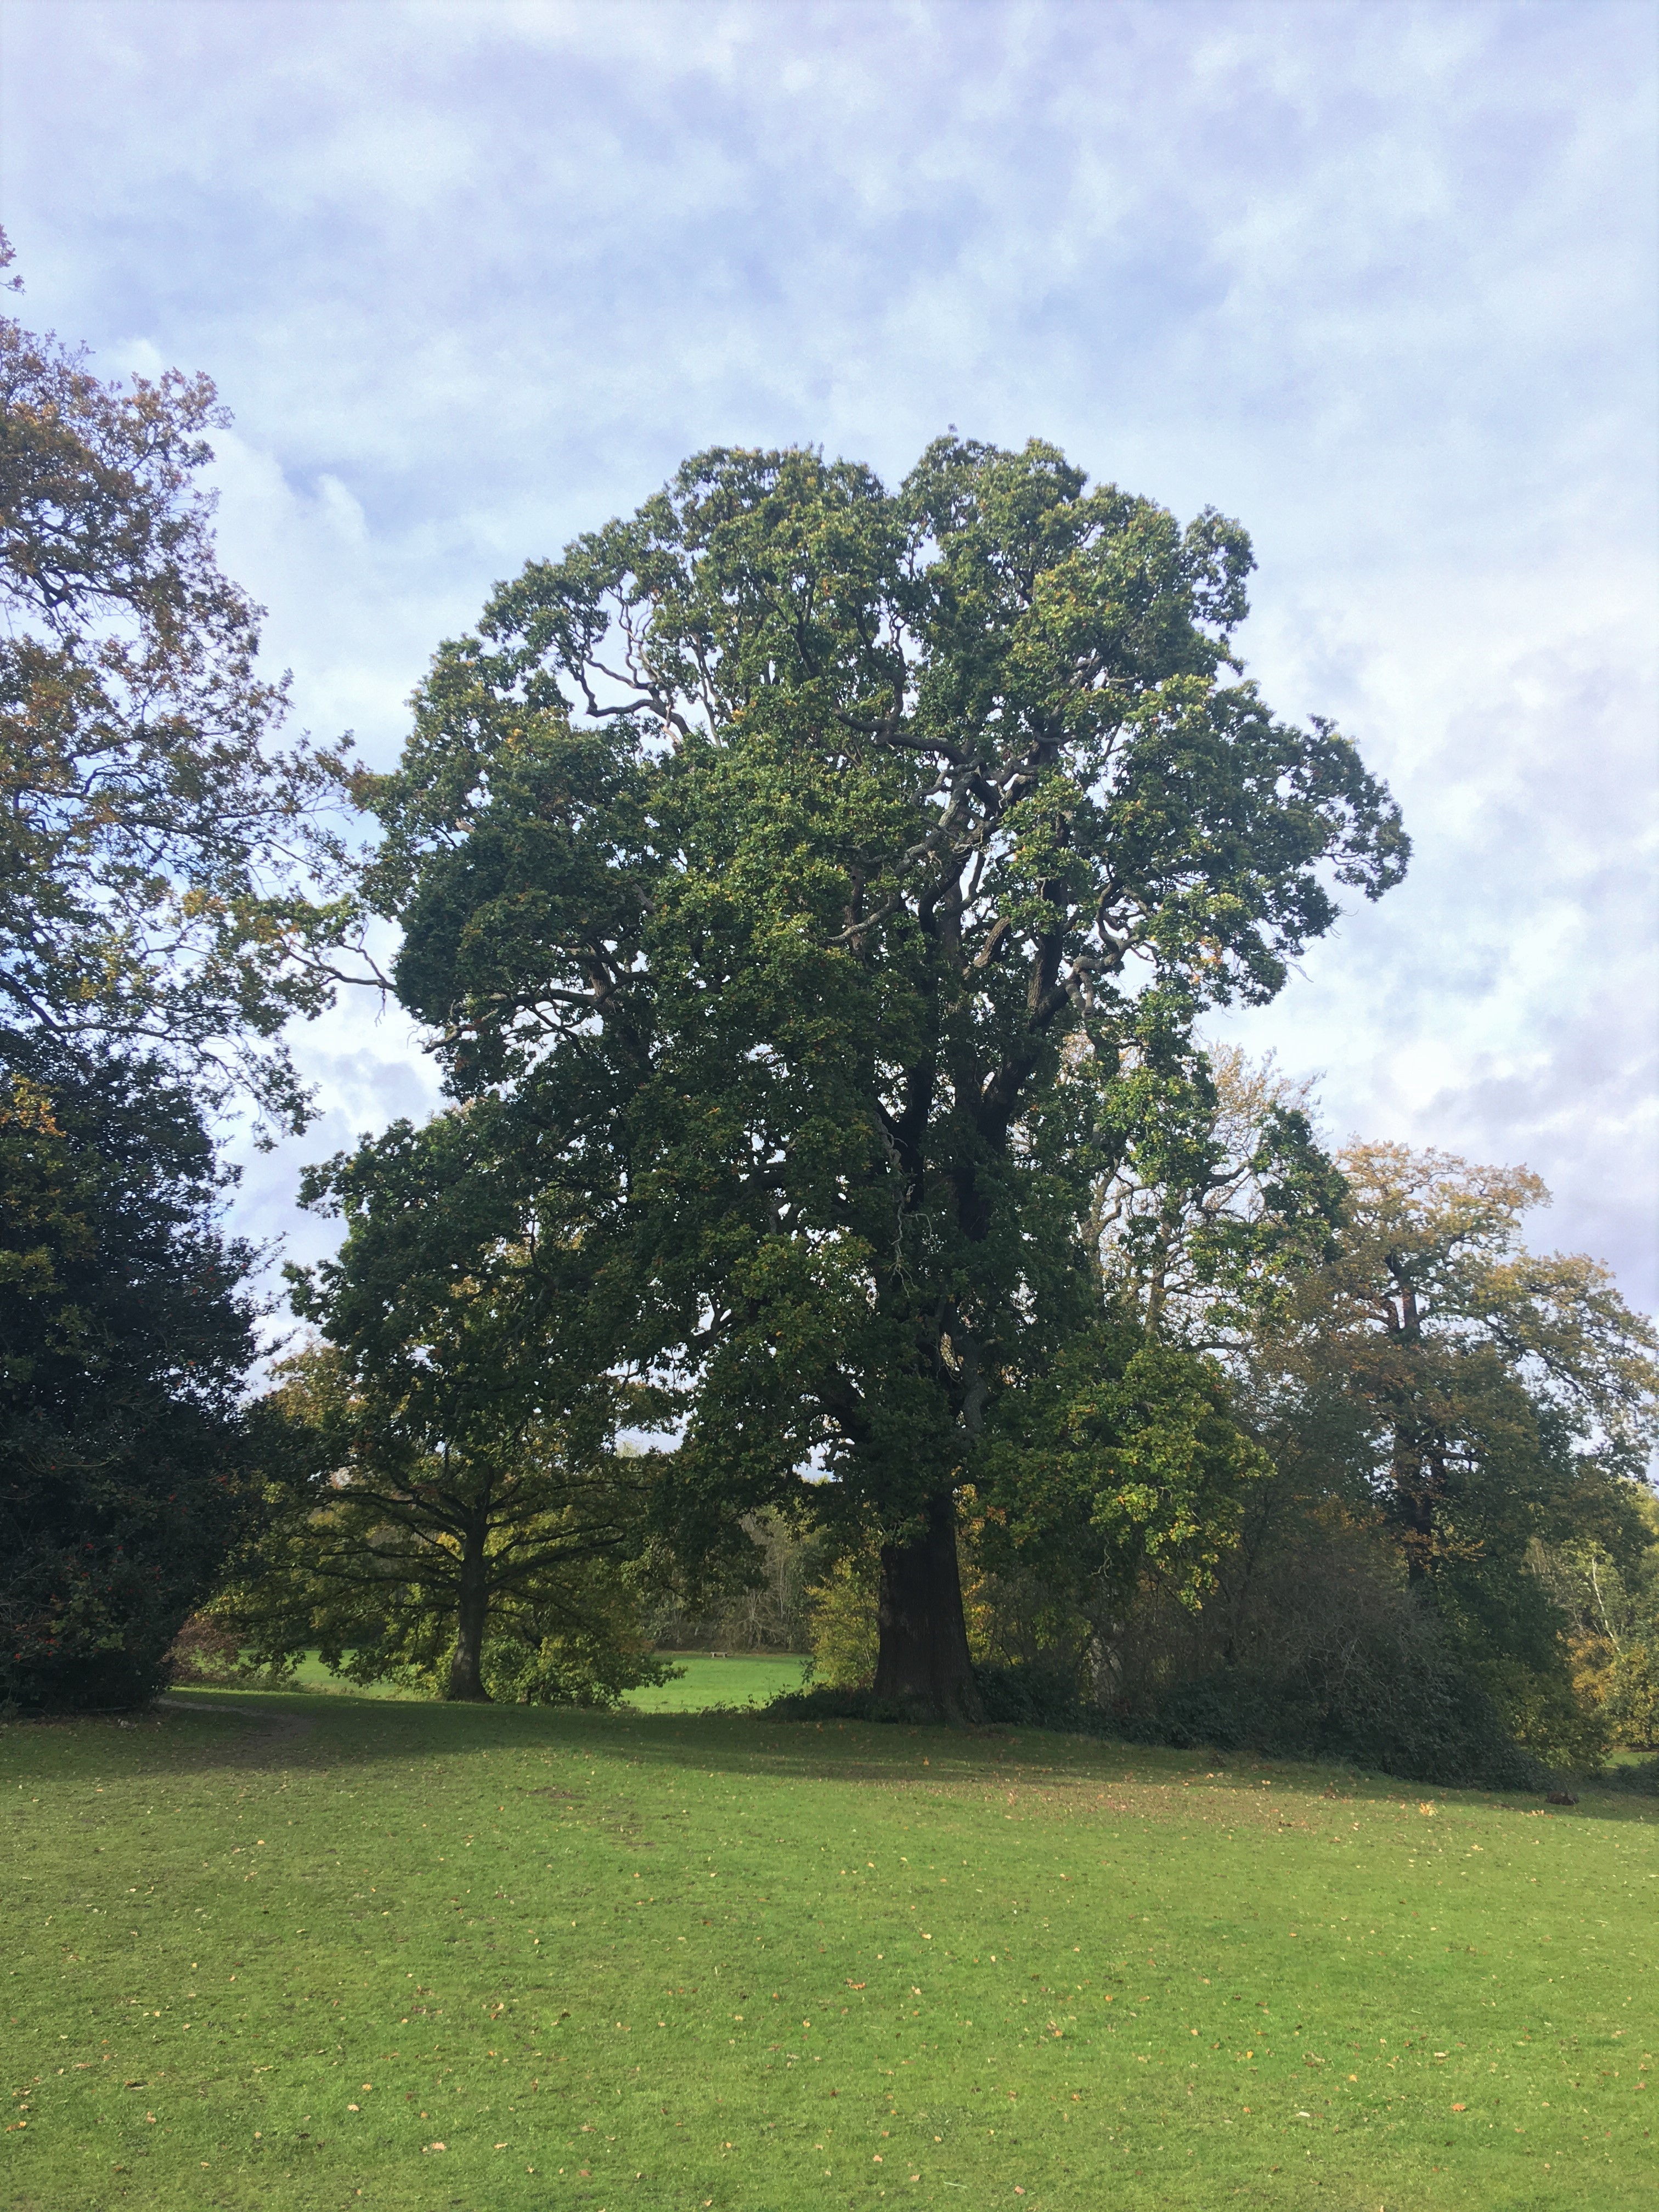 Photograph of mature oak tree at Homewood Park